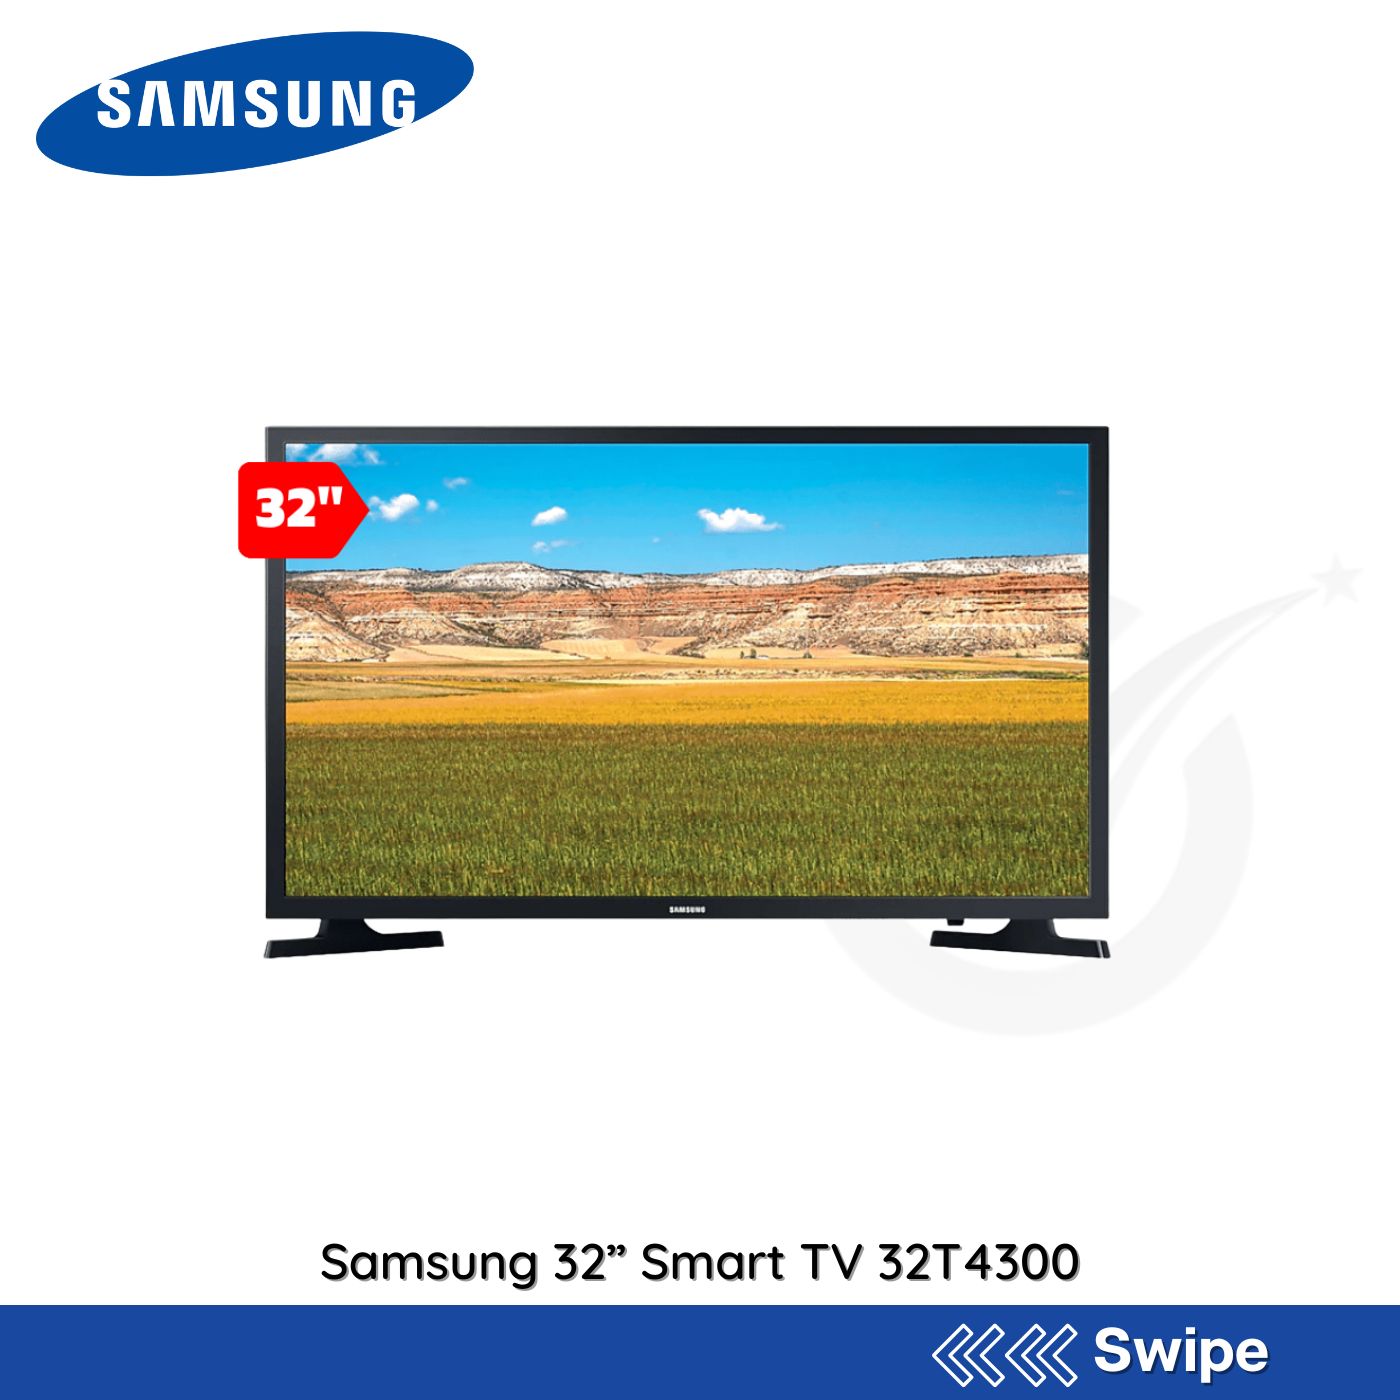 Samsung 32” Smart TV 32T4300